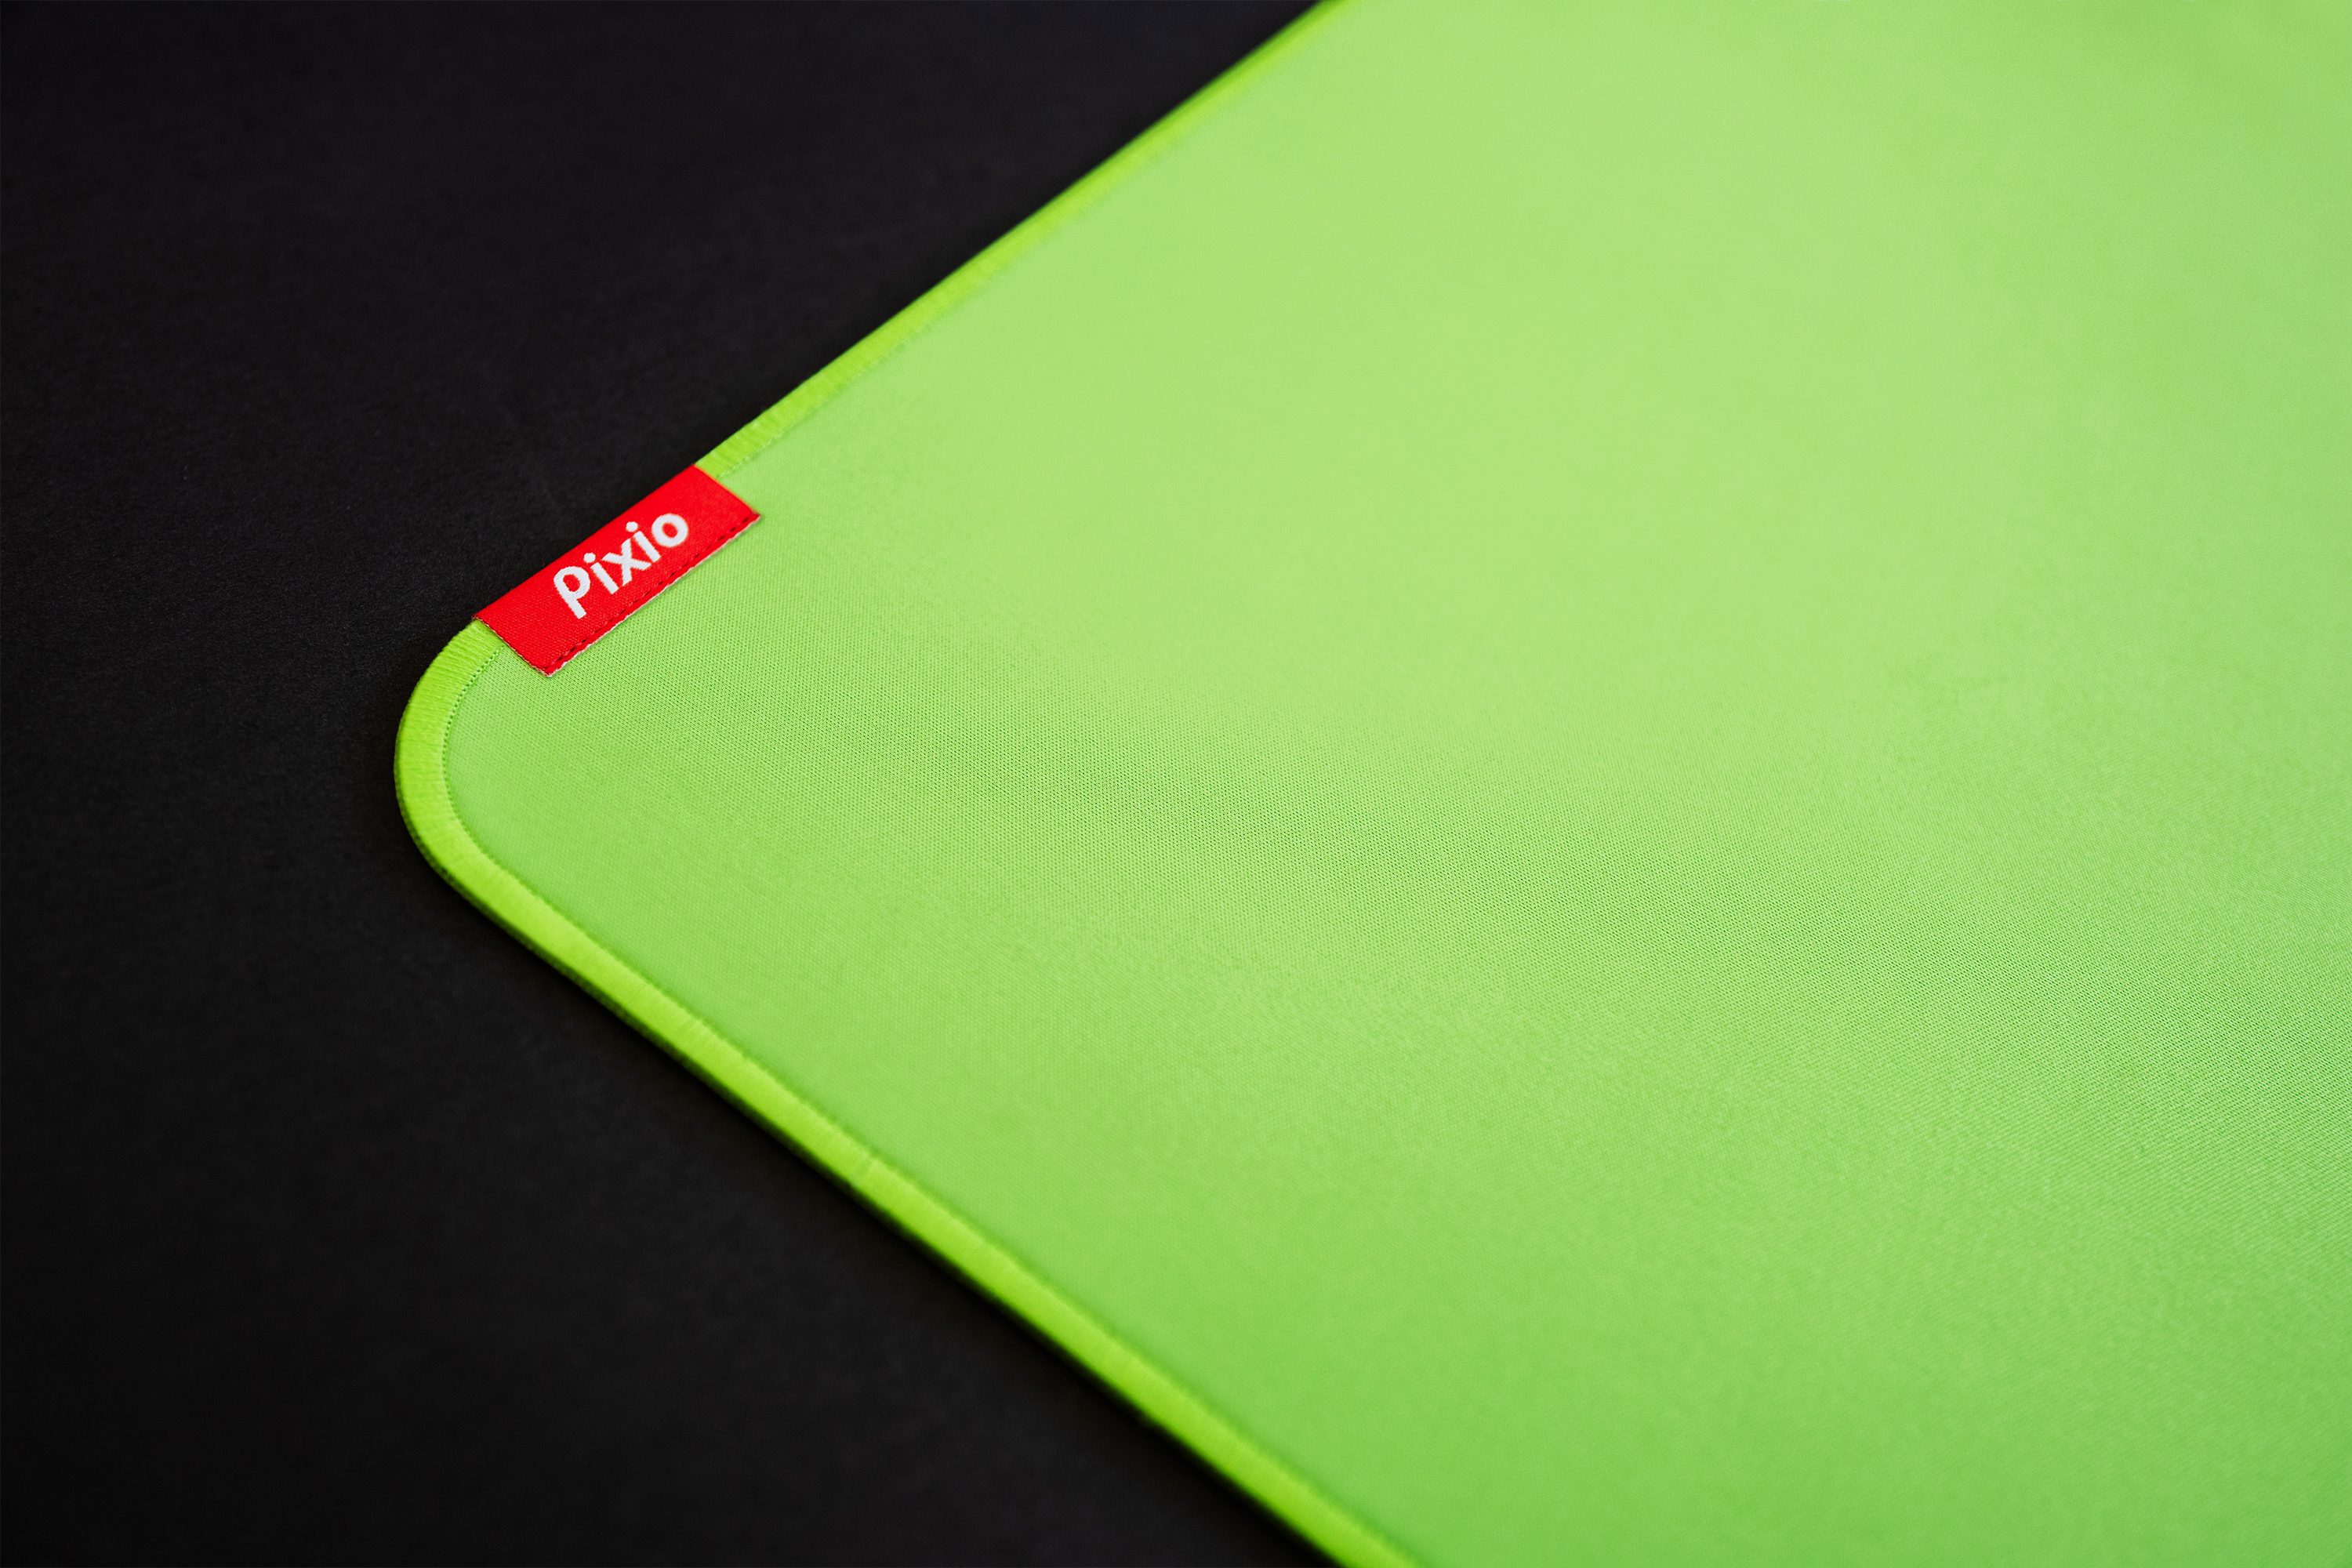 Pixio Green Screen Mouse Mat